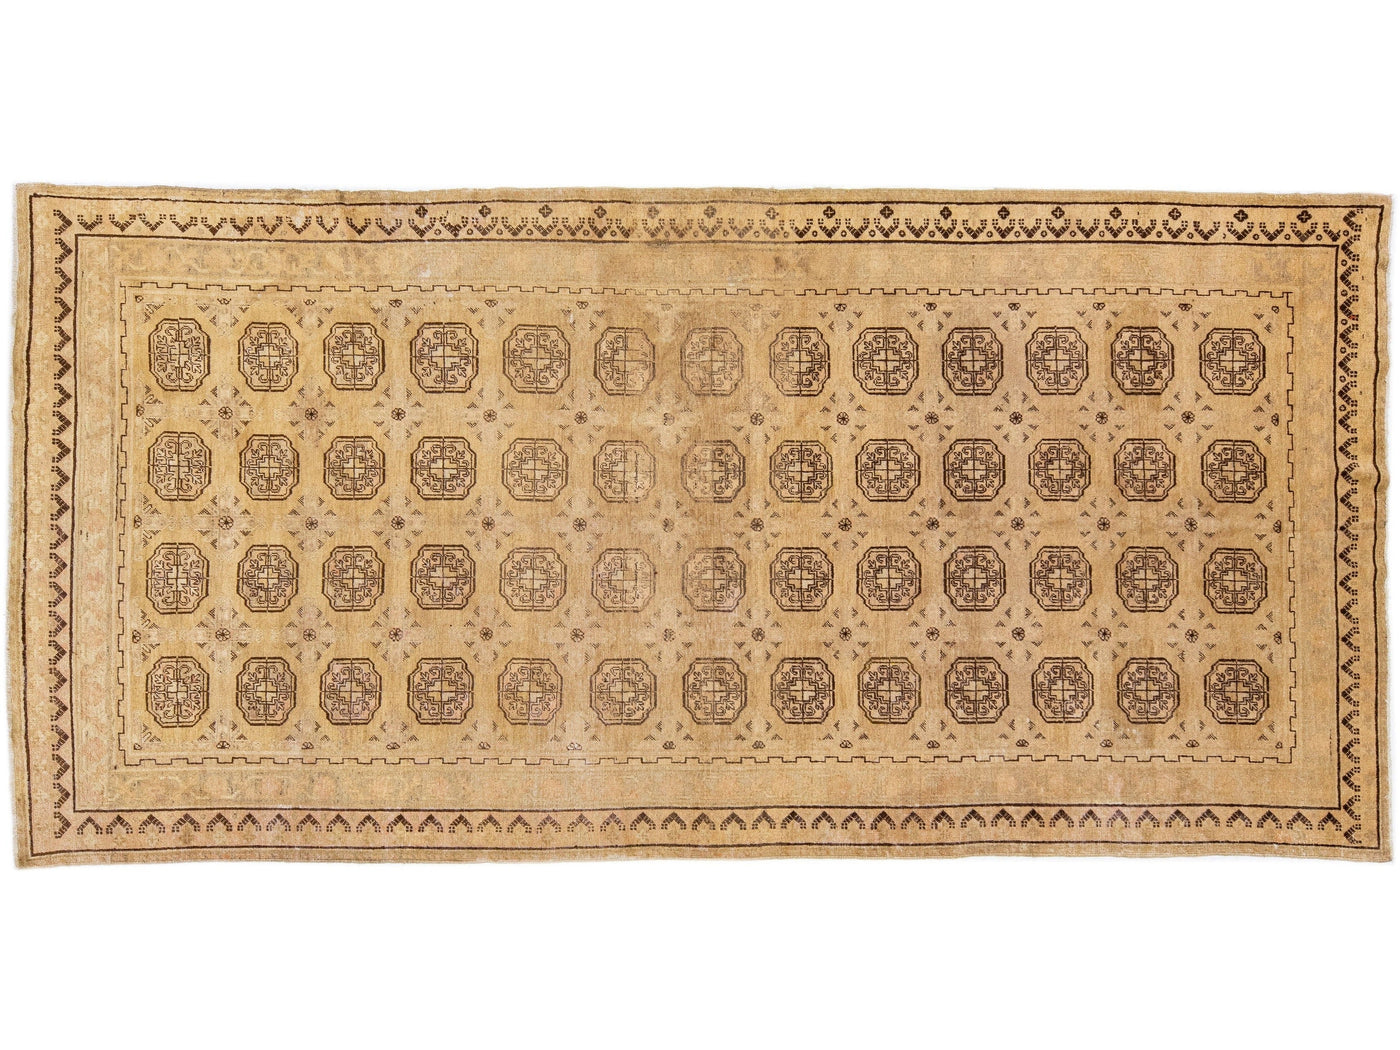 Antique Khotan Tan Handmade Geometric Pattern Wool Rug